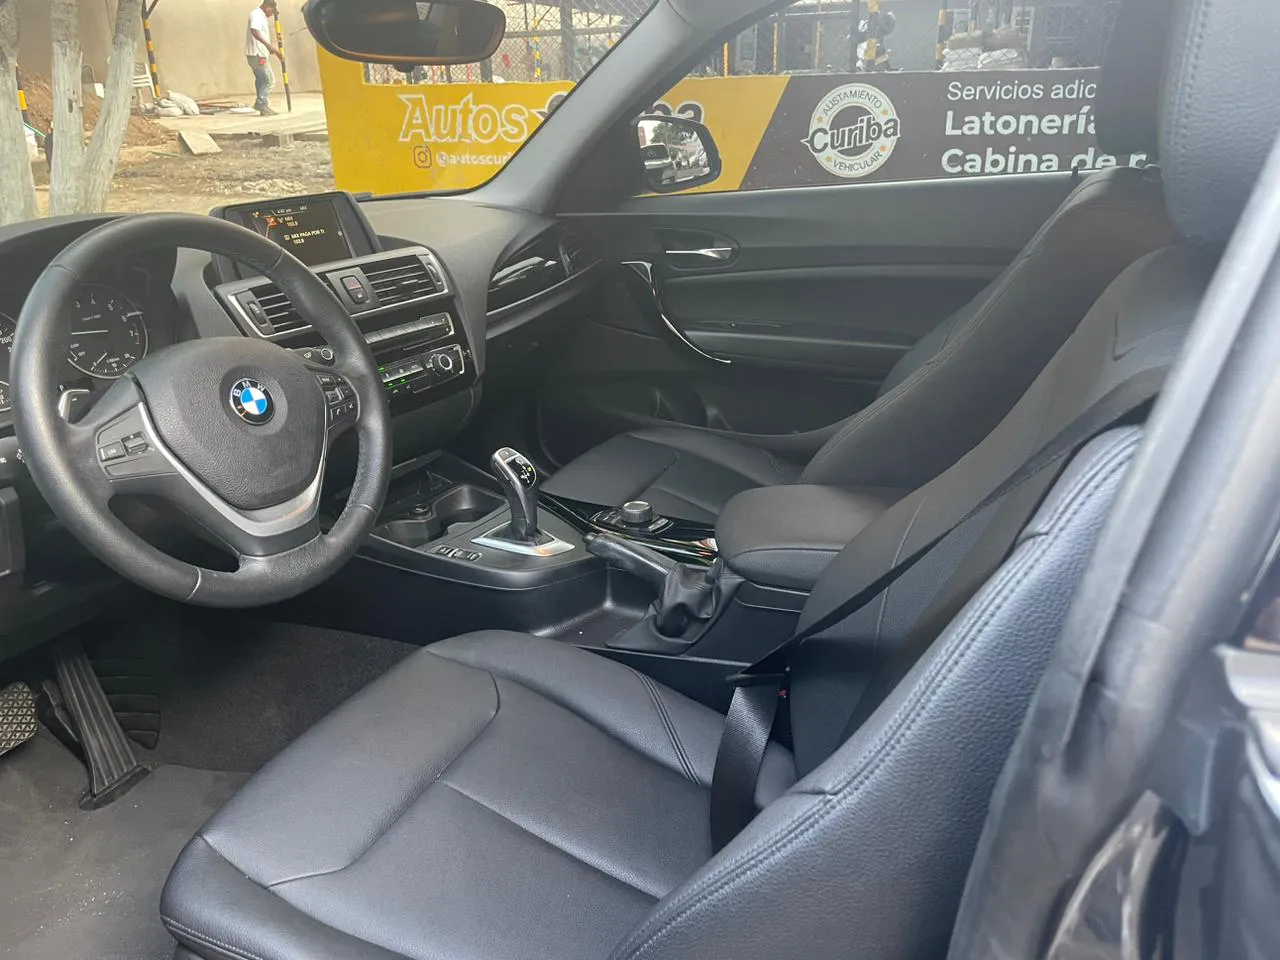 BMW CARROS 220i F22 COUPE Sportline 2017